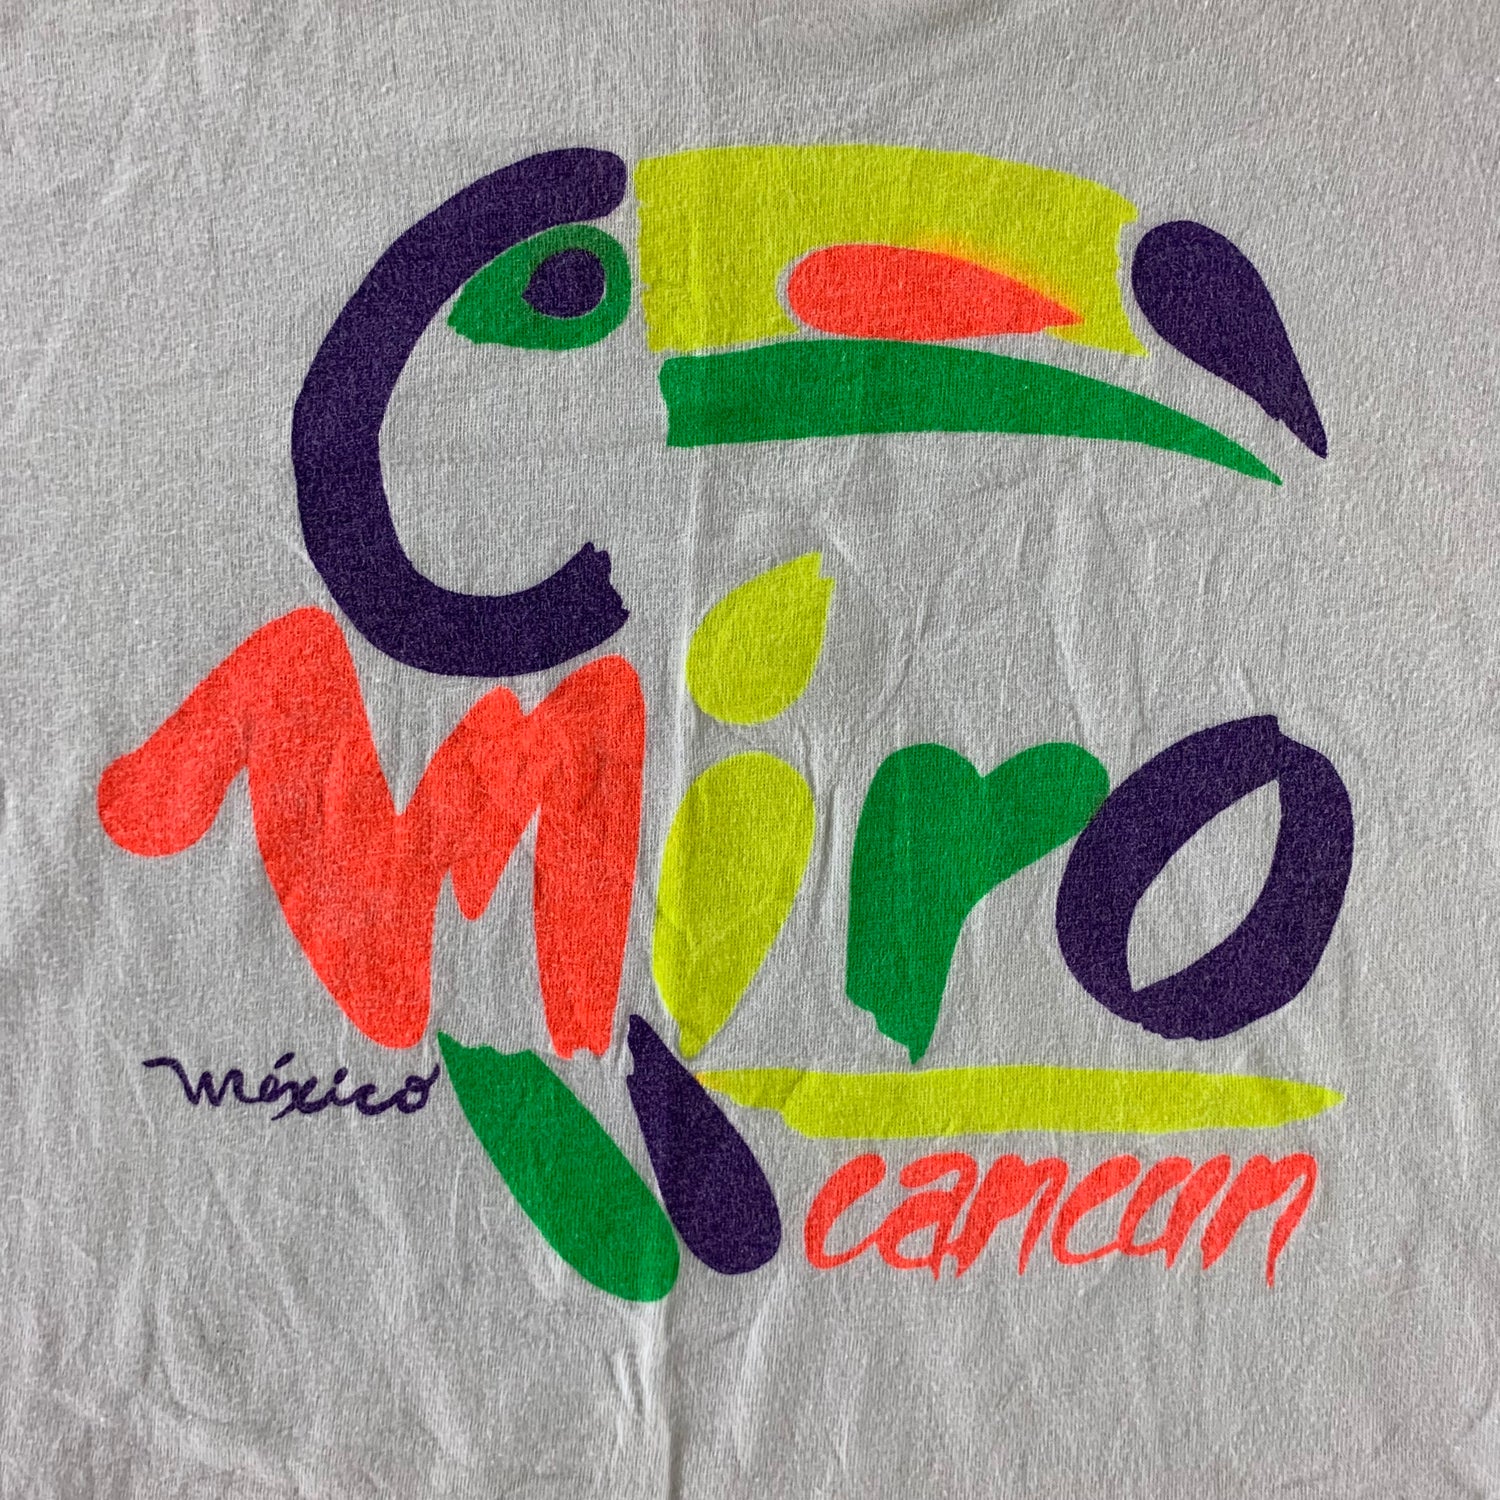 Vintage 1990s Cancun Mexico T-shirt size XXL